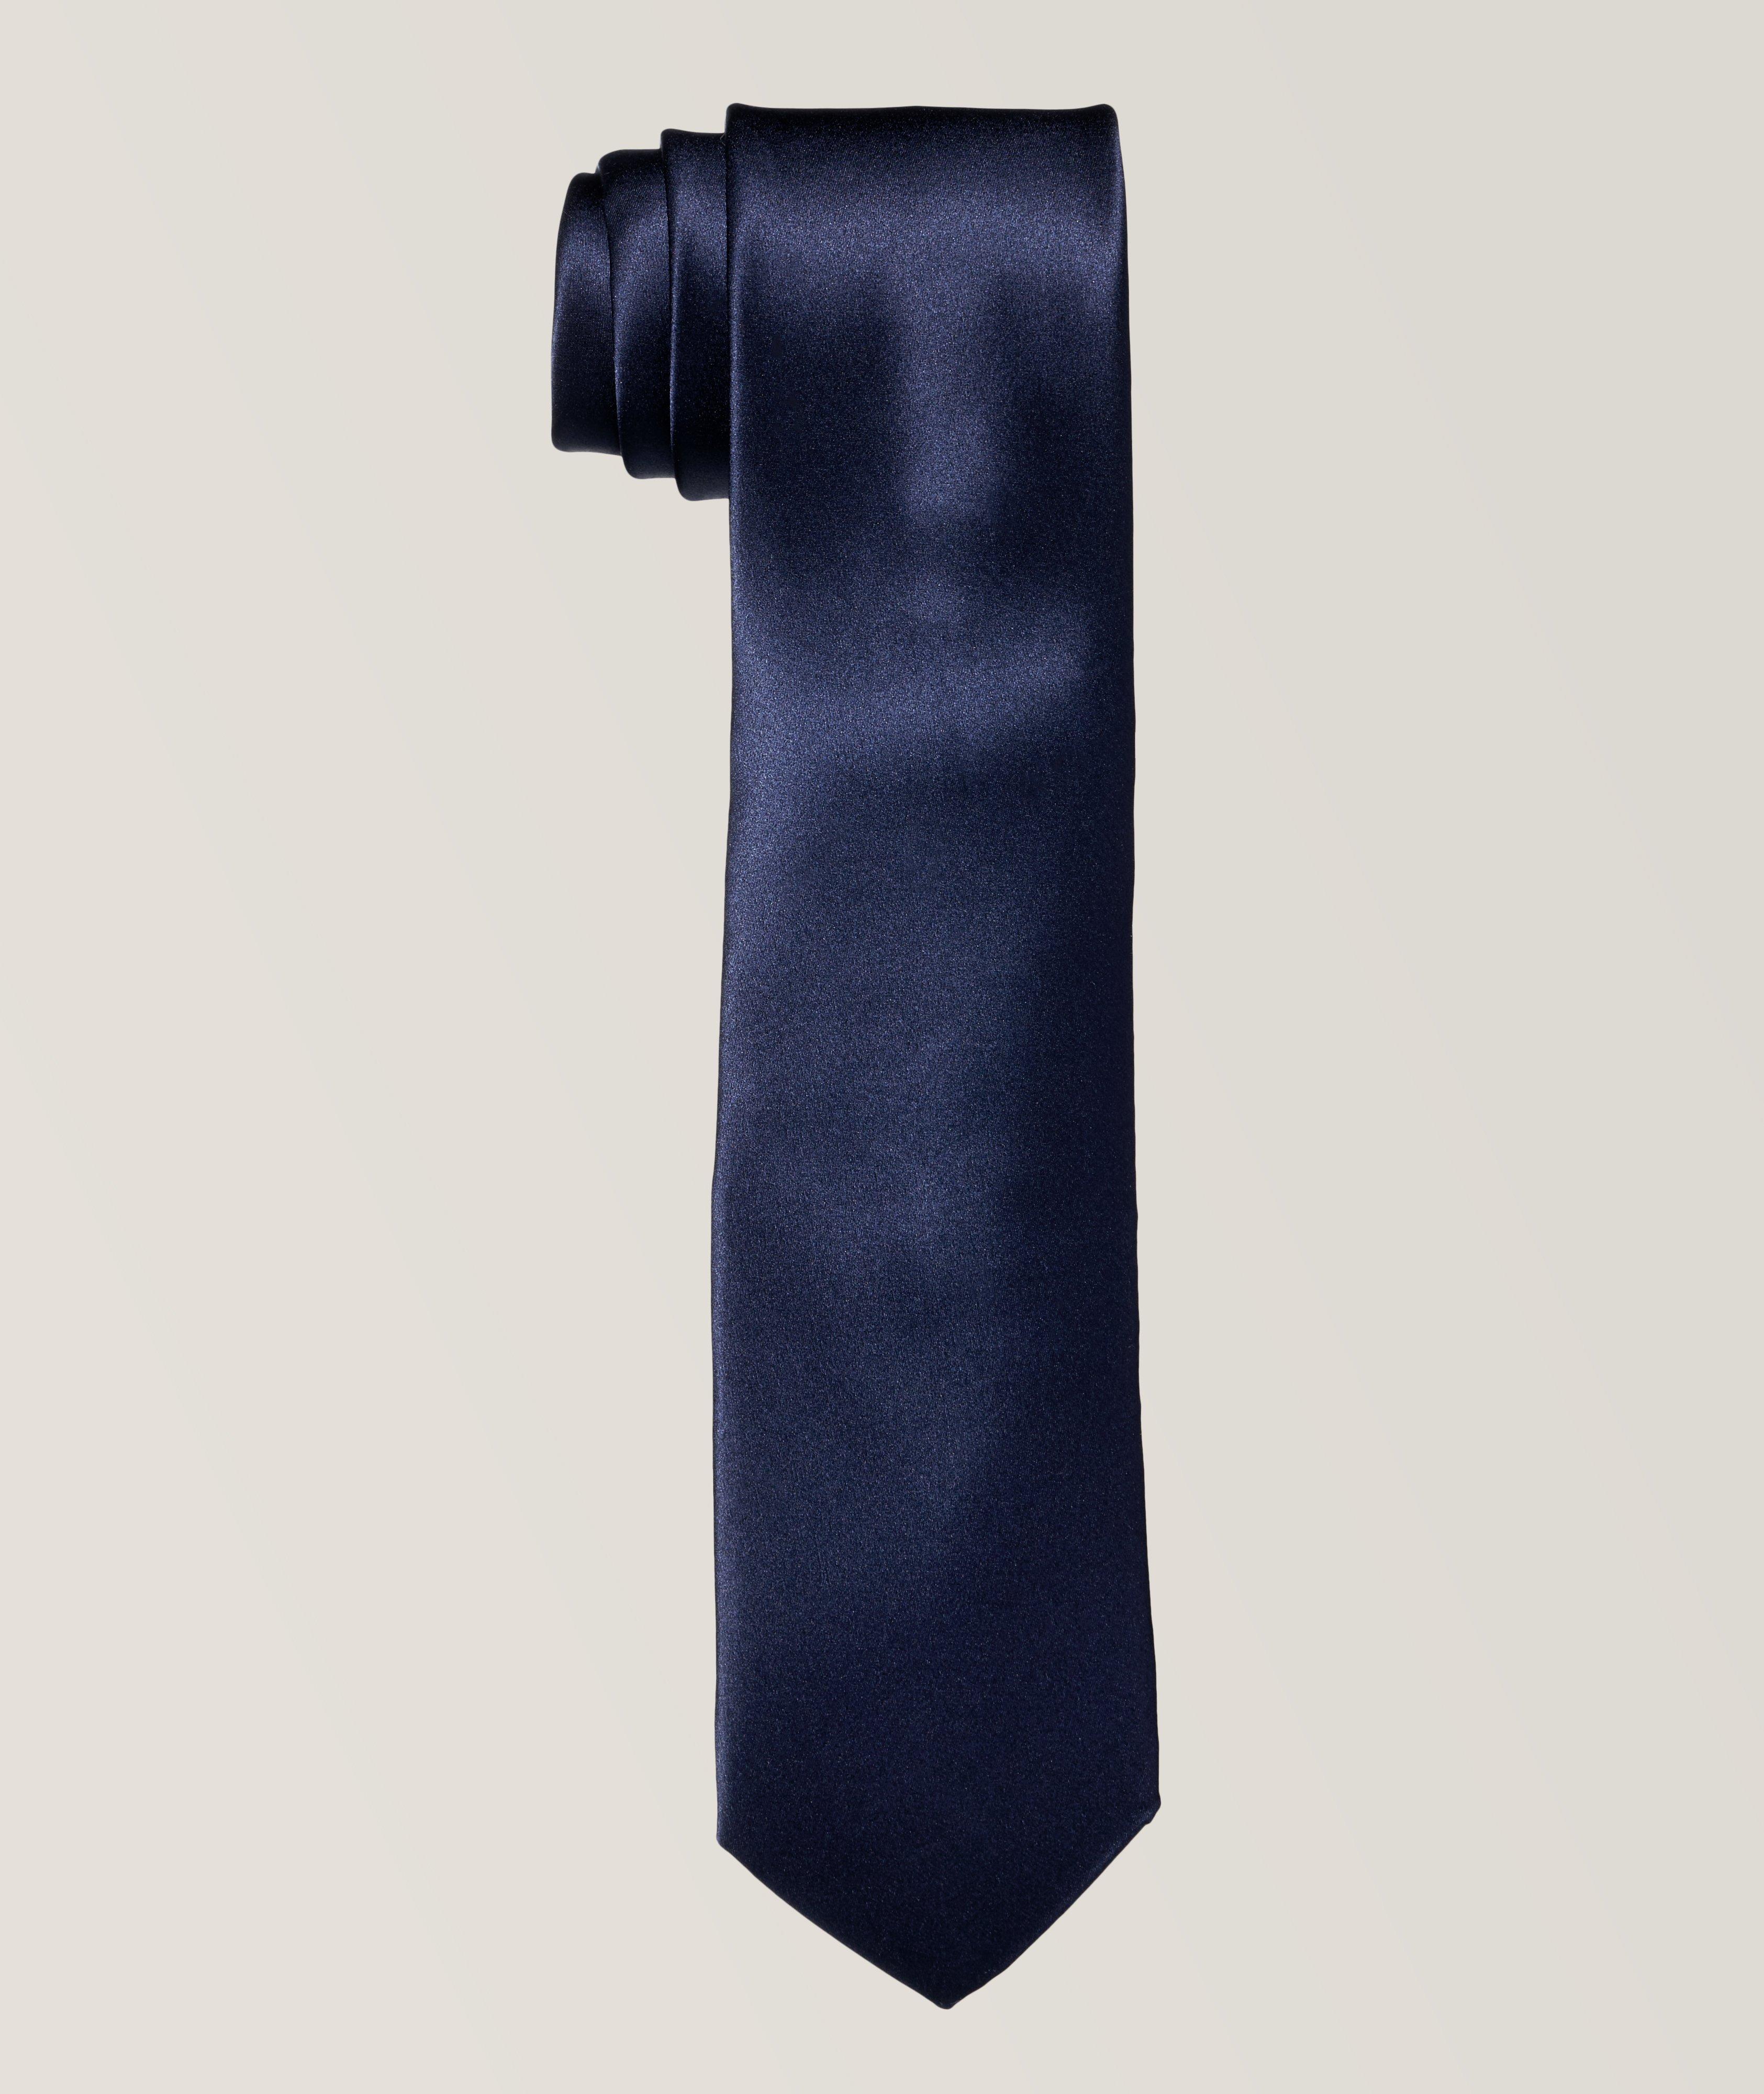 Woven Silk Tie image 0